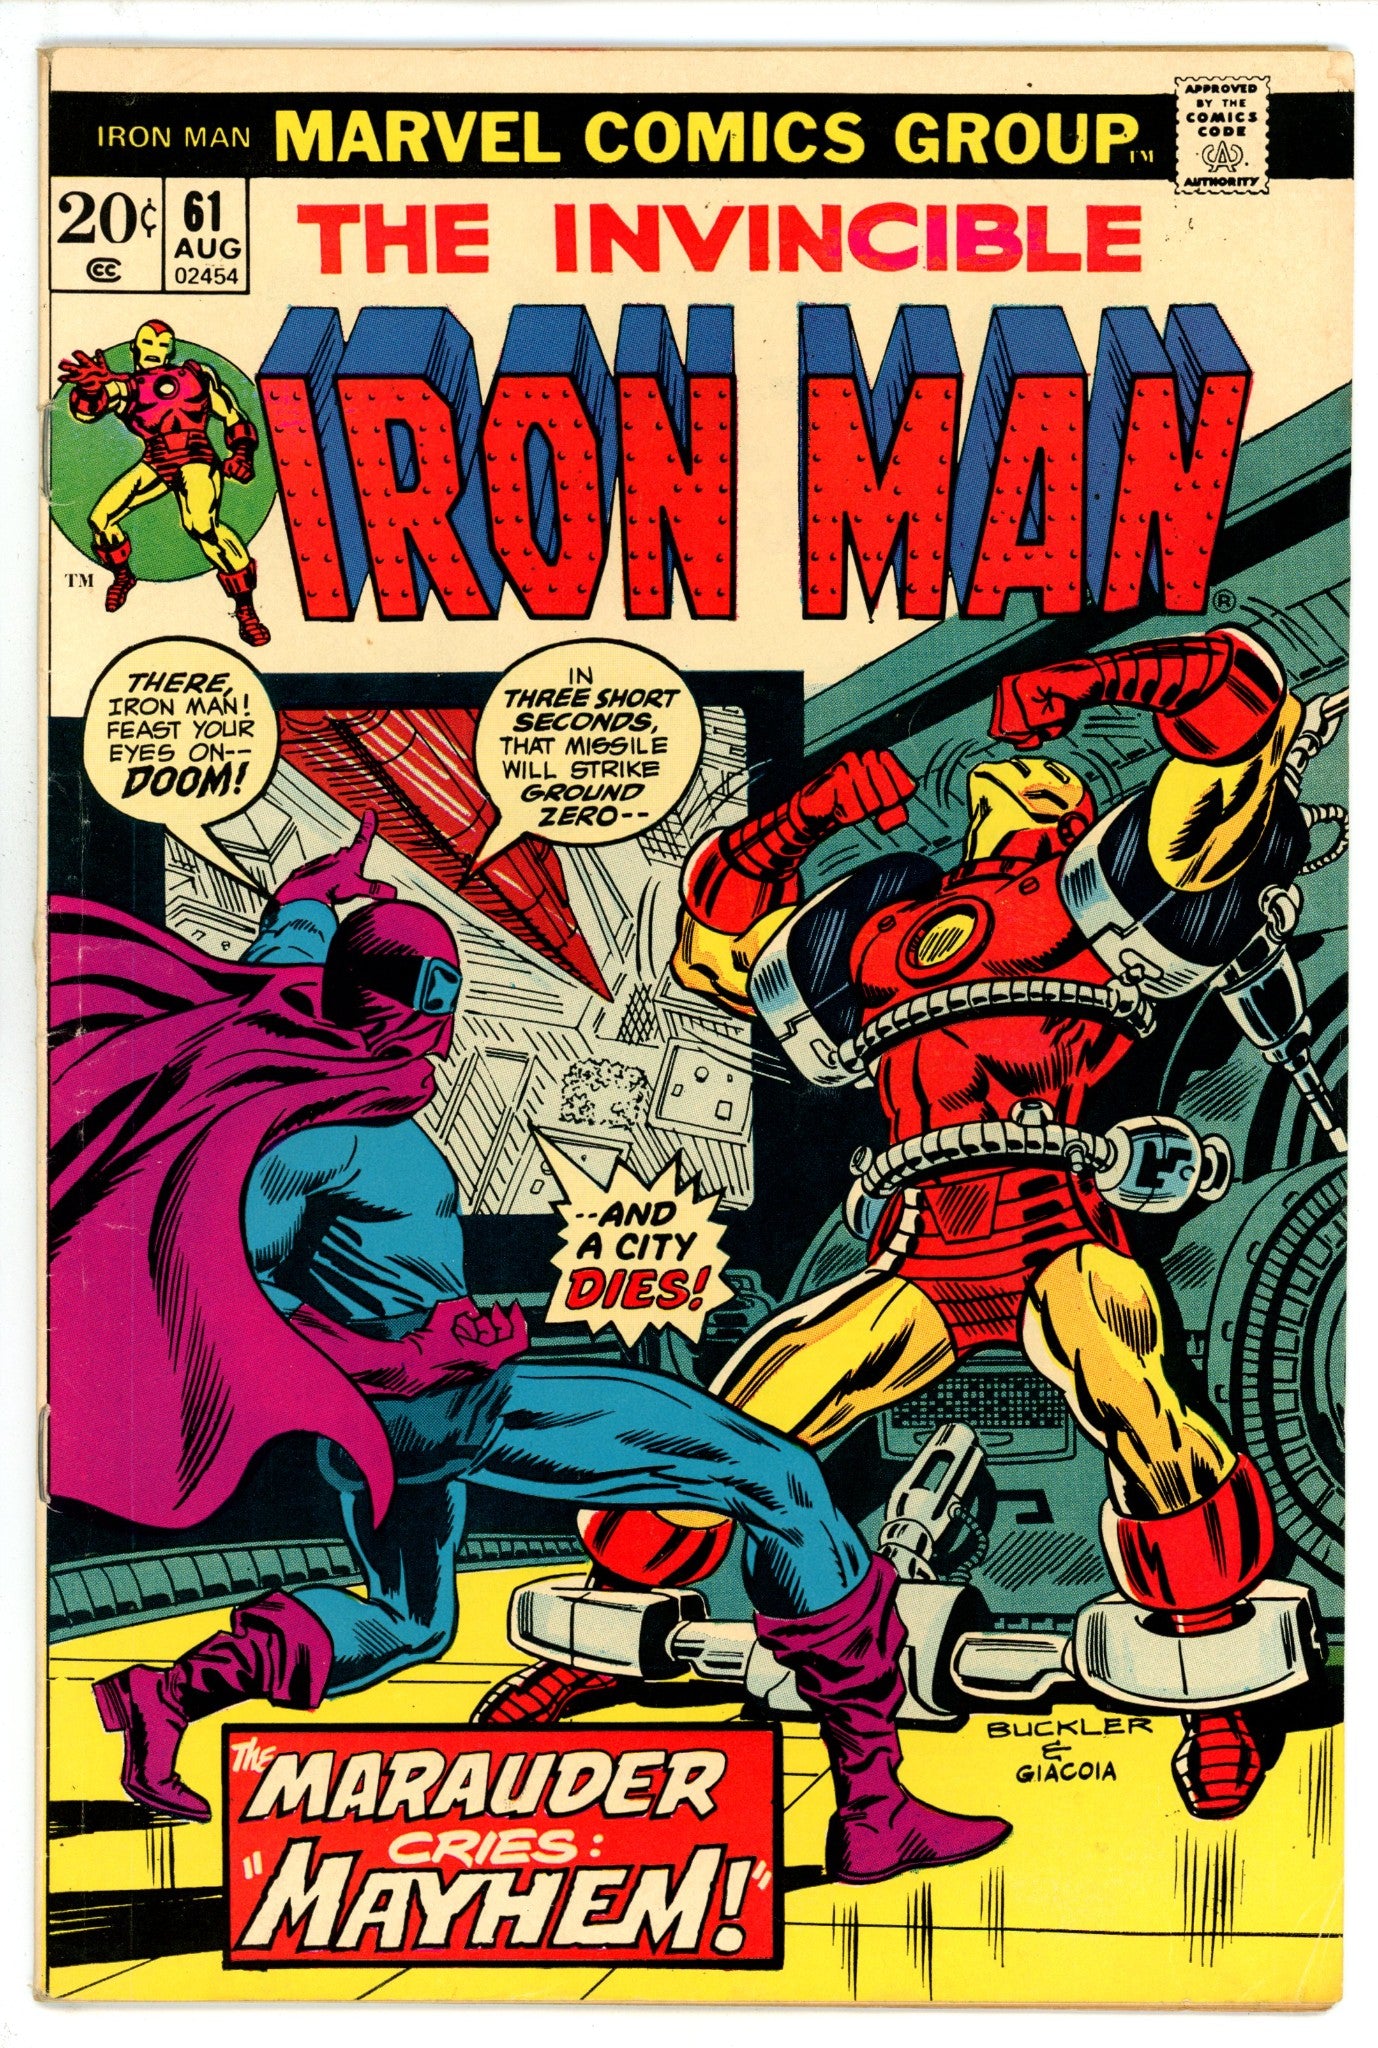 Iron Man Vol 1 61 FN- (5.5) (1973) 